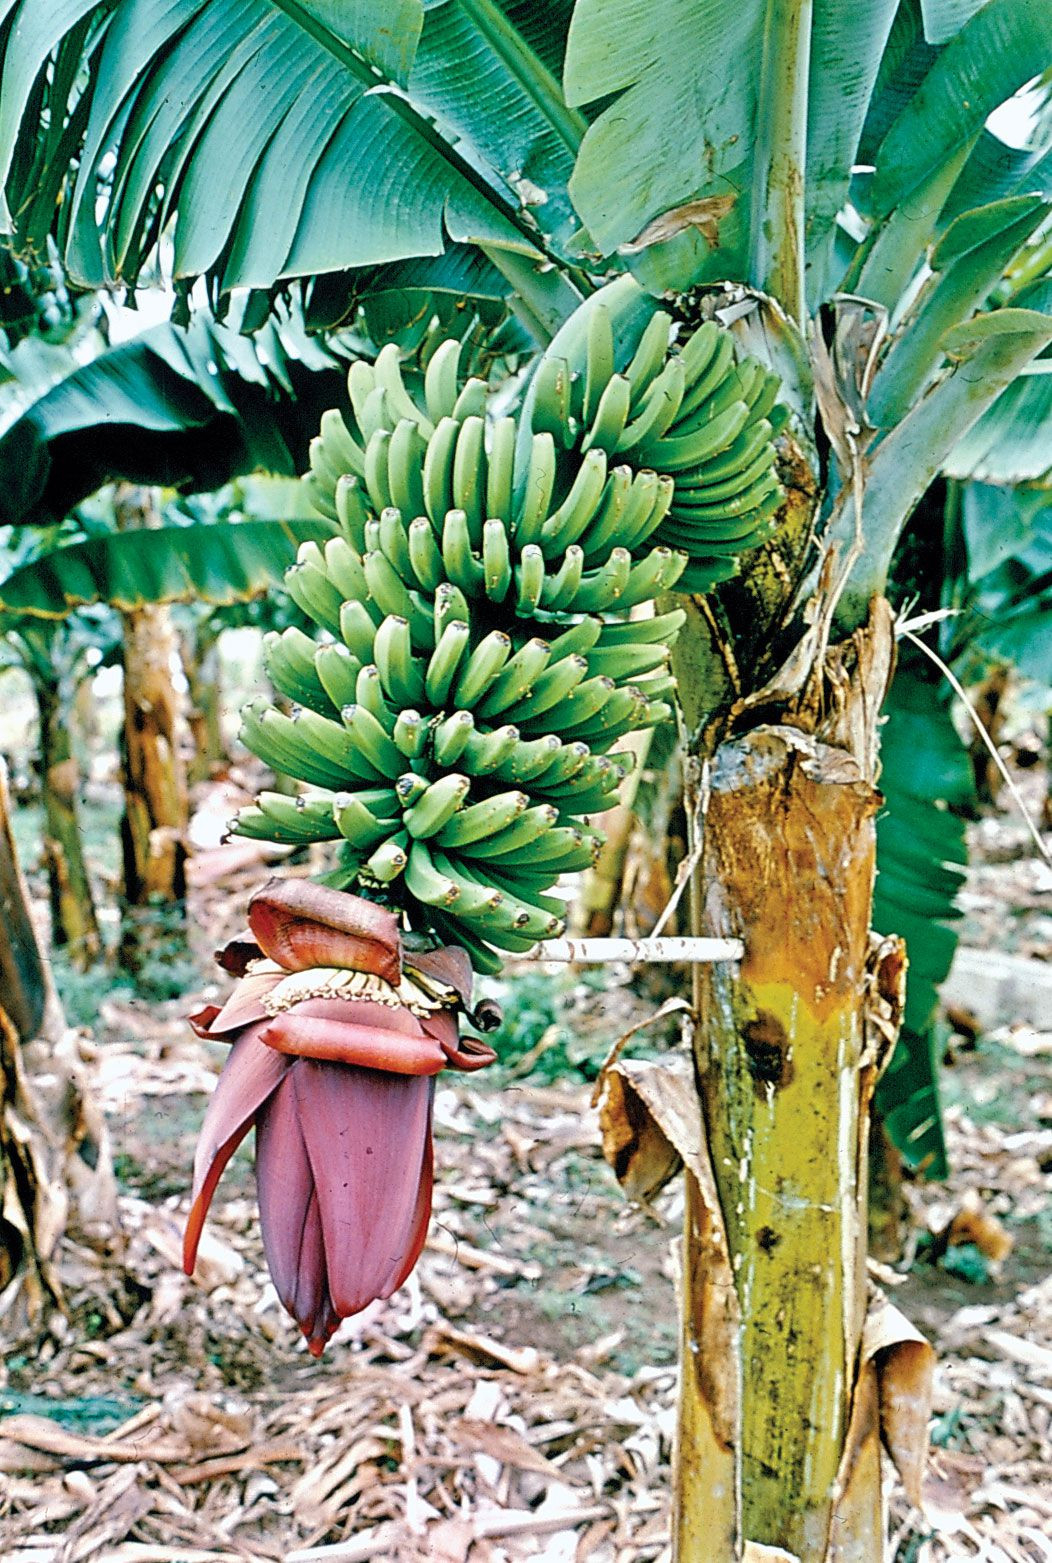 Banana | Description, History, Cultivation, Nutrition, Benefits